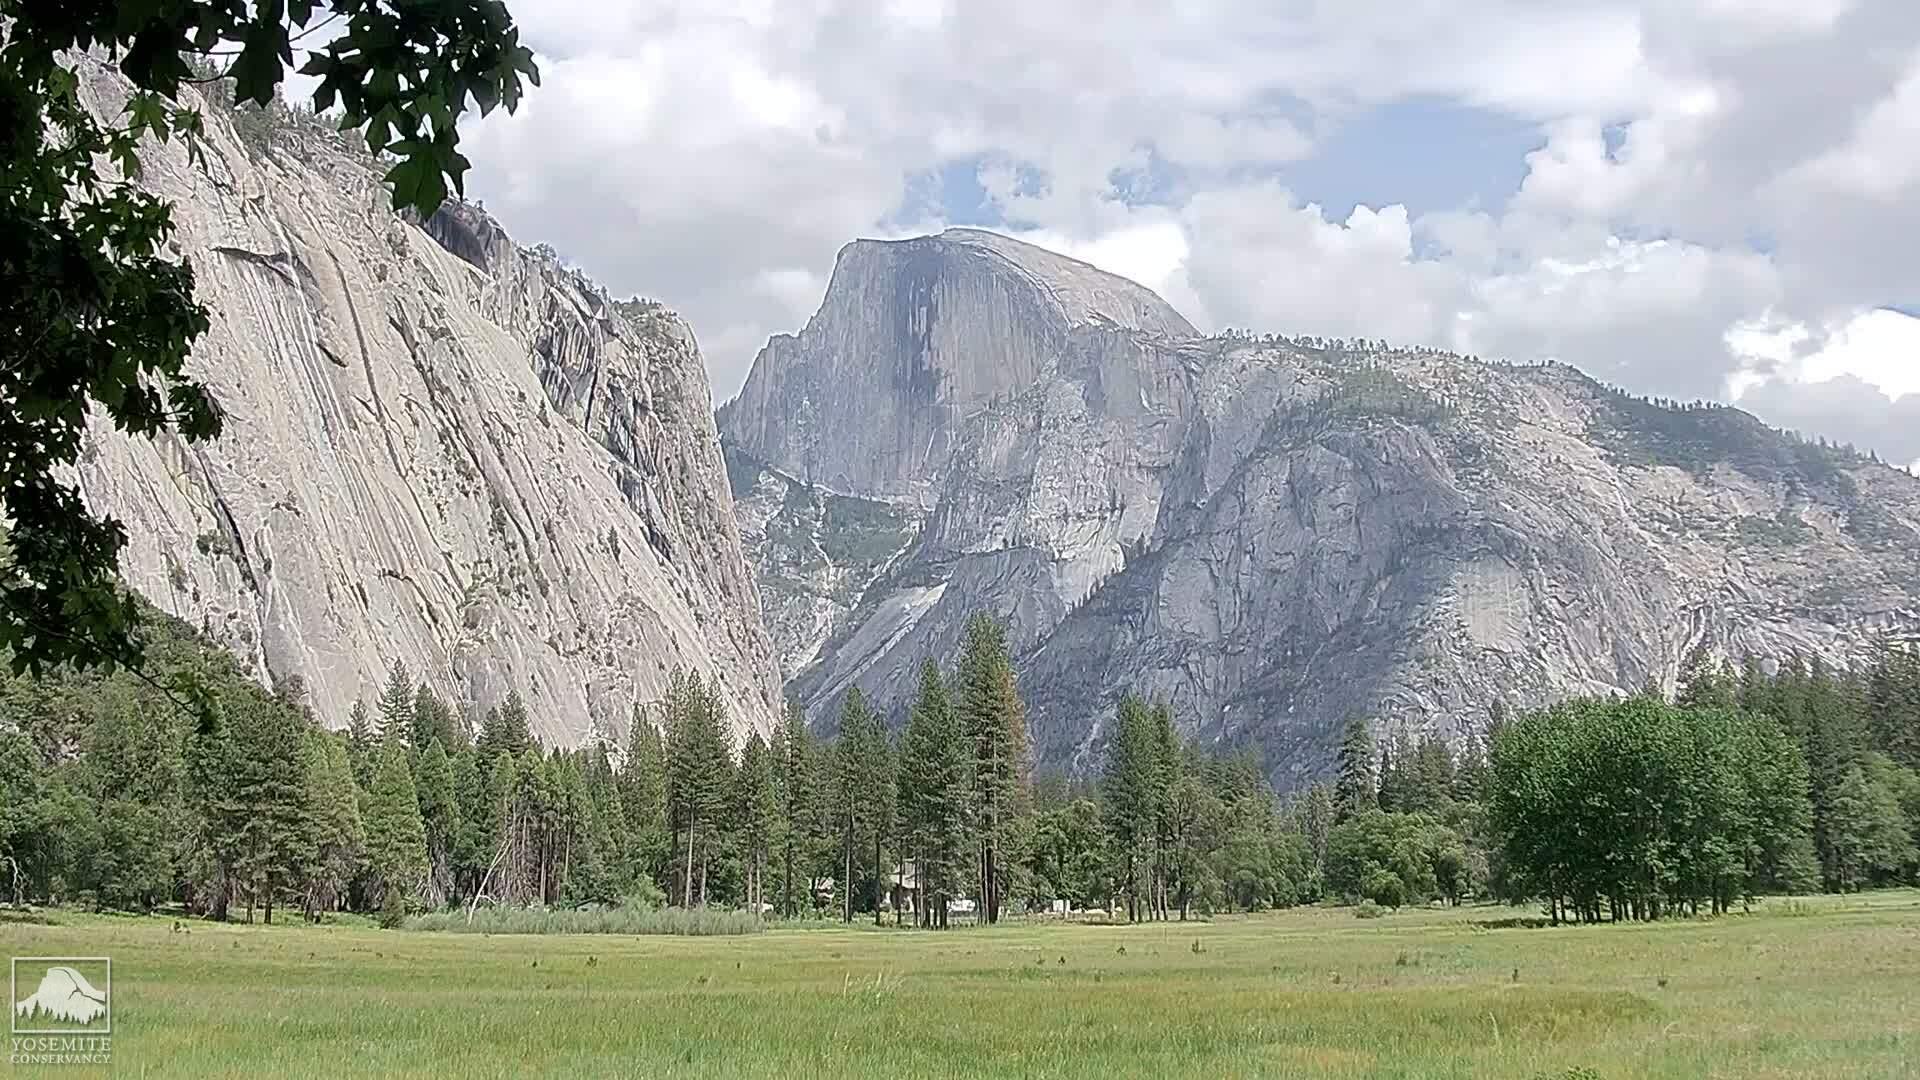 Yosemite National Park, Californie Me. 14:45